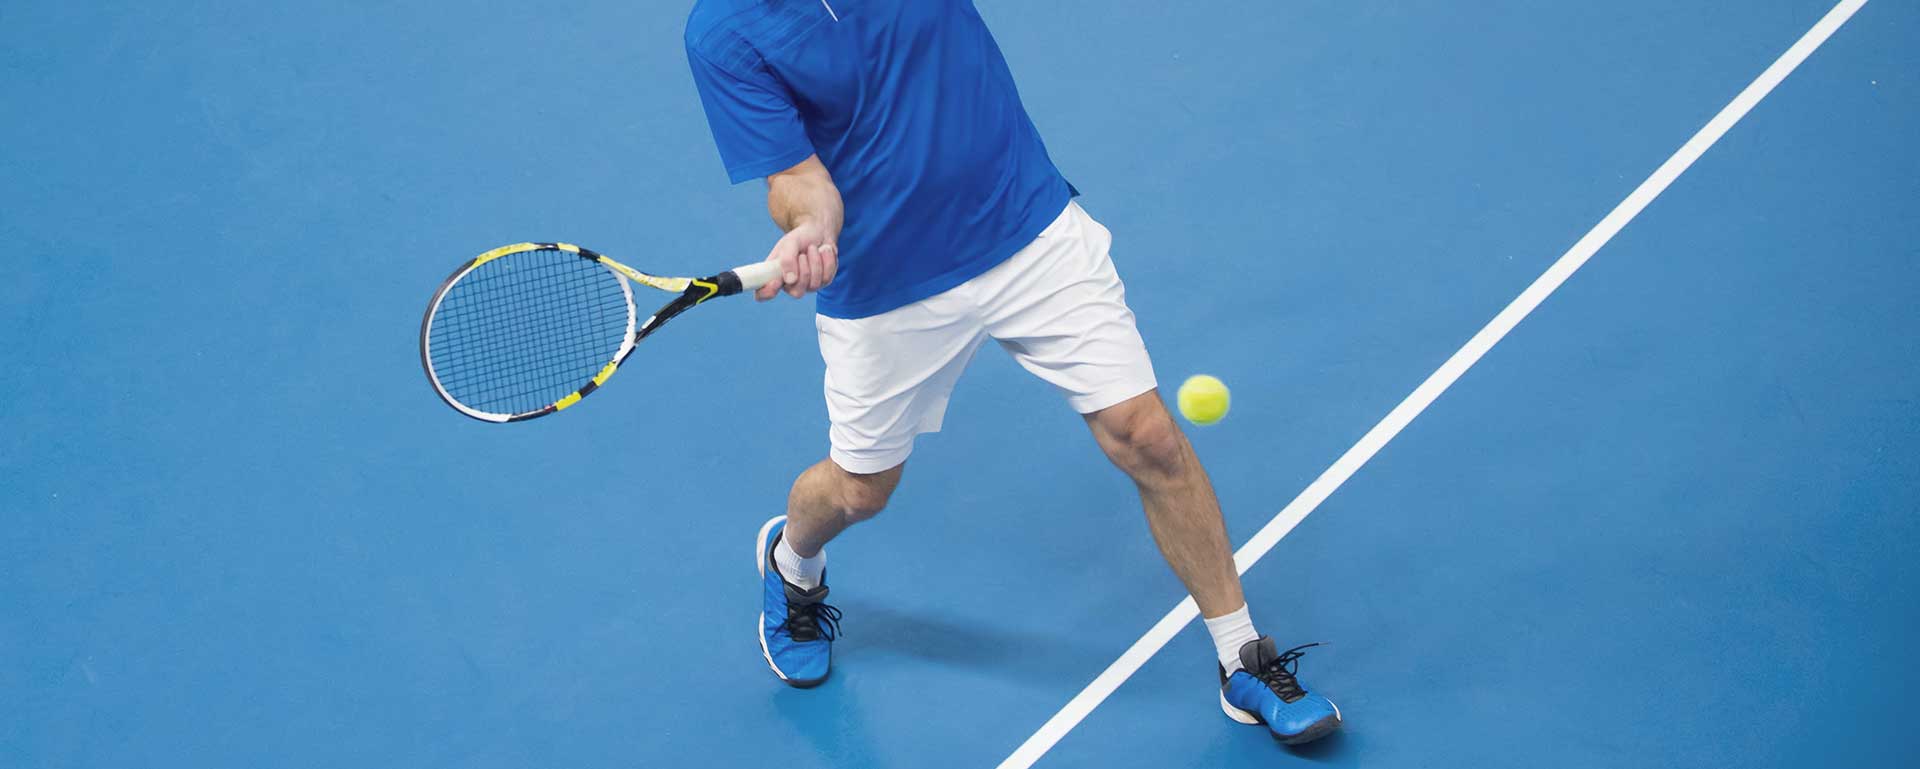 Jak obstawiać najważniejsze turnieje tenisowe takie jak: Wimbledon, US Open, French Open i Australian Open